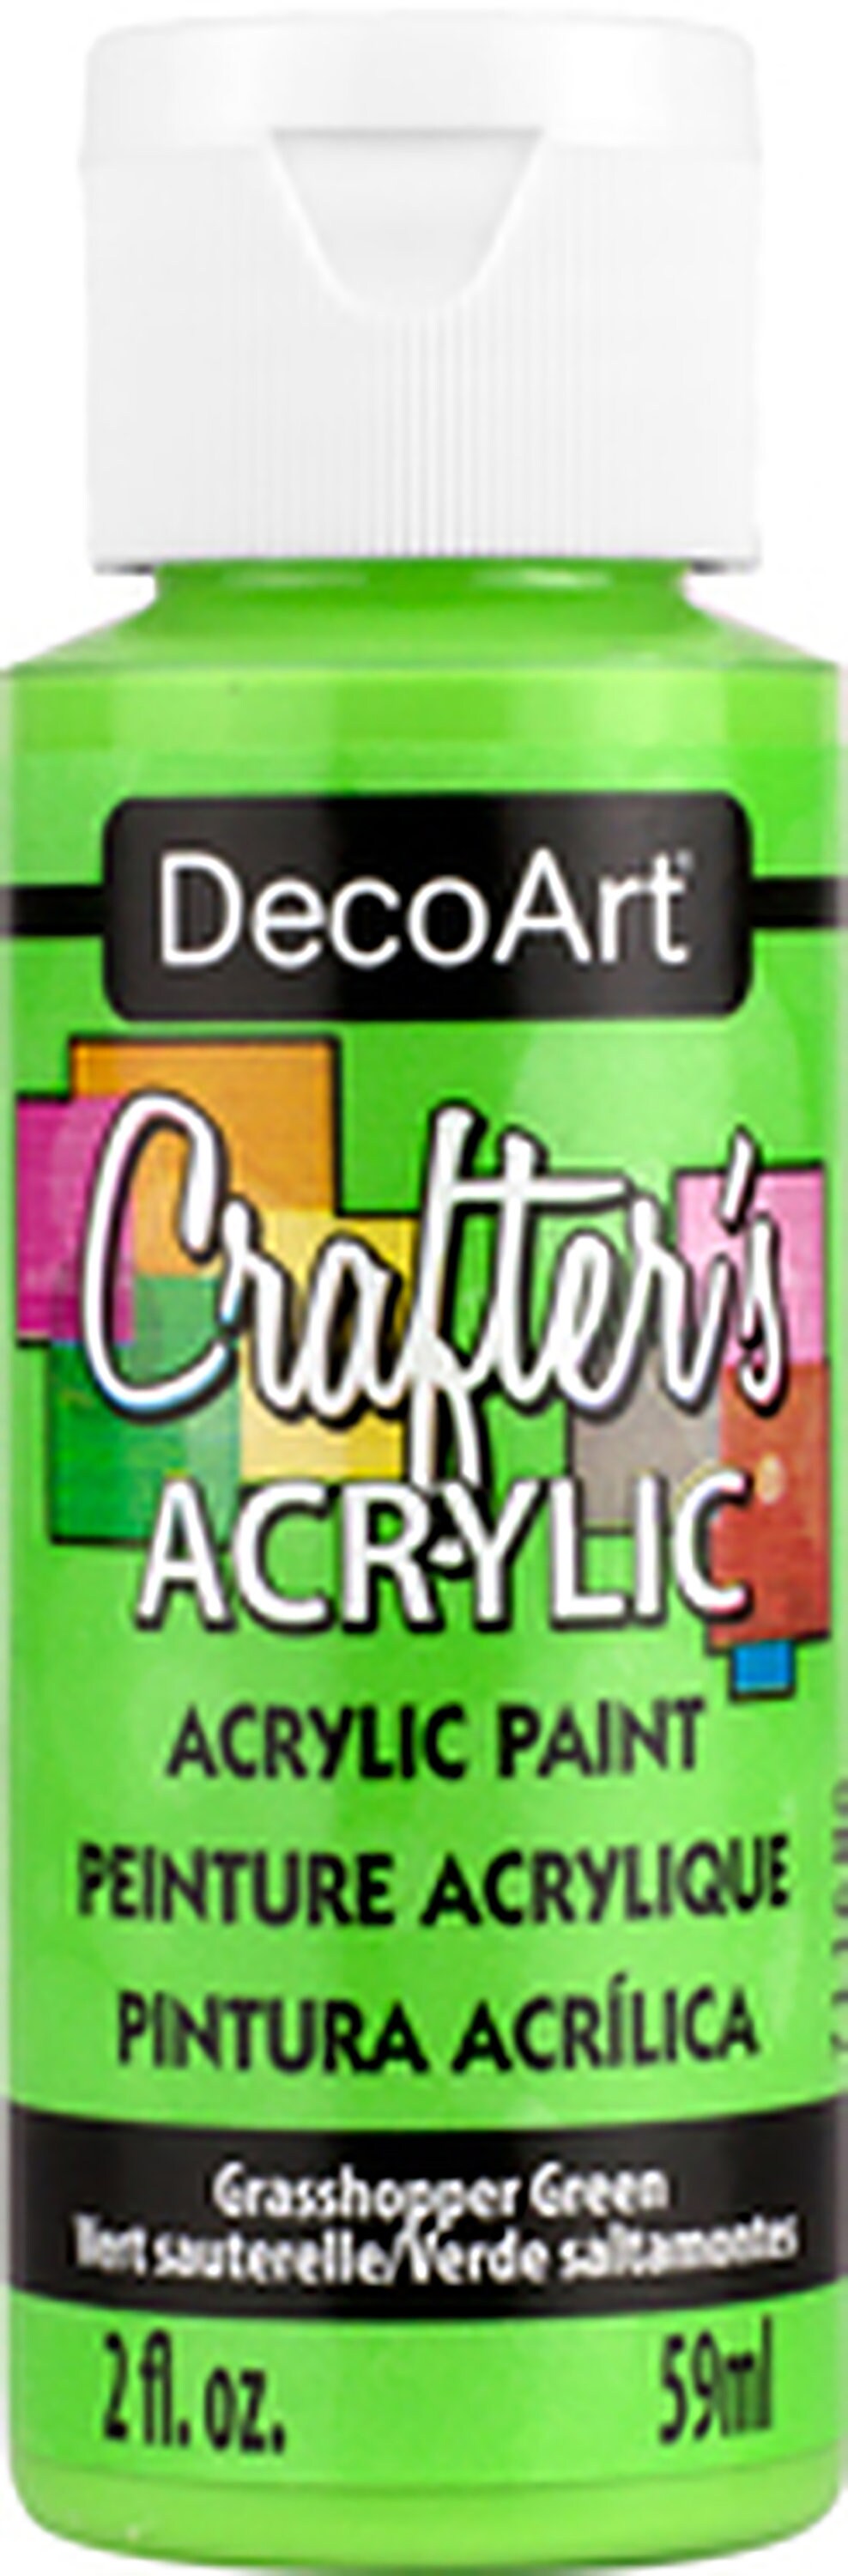 Decoart Crafters Acrylic Paint Purple Tones 59ml 2oz Bottles Craft